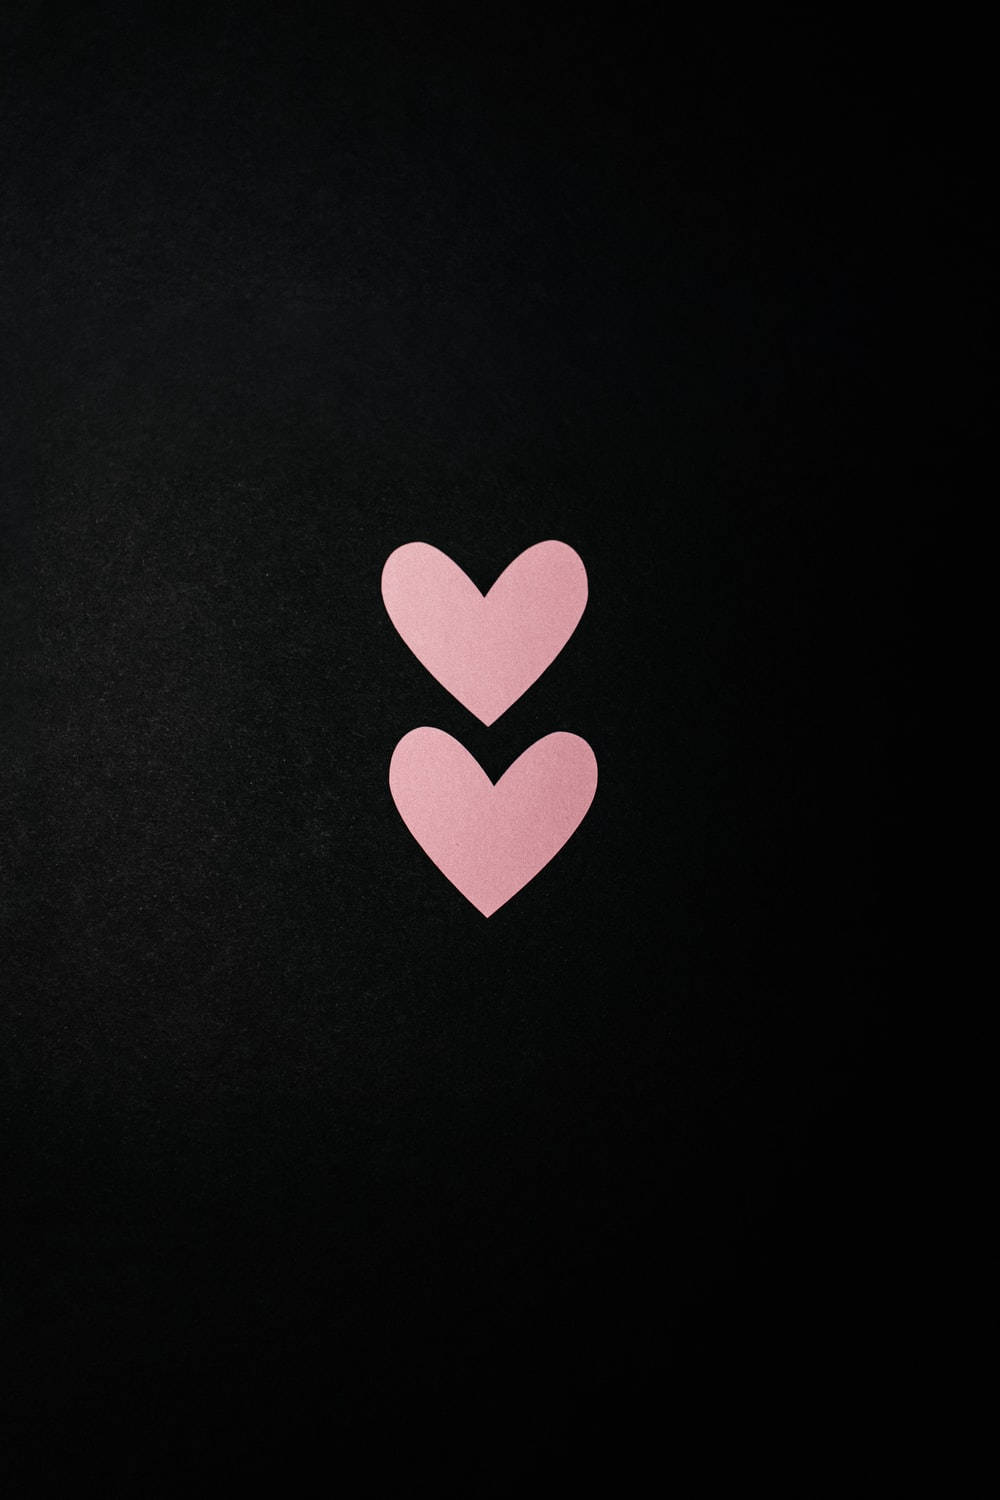 Download Pastel Pink Heart In Black Background Wallpaper ...